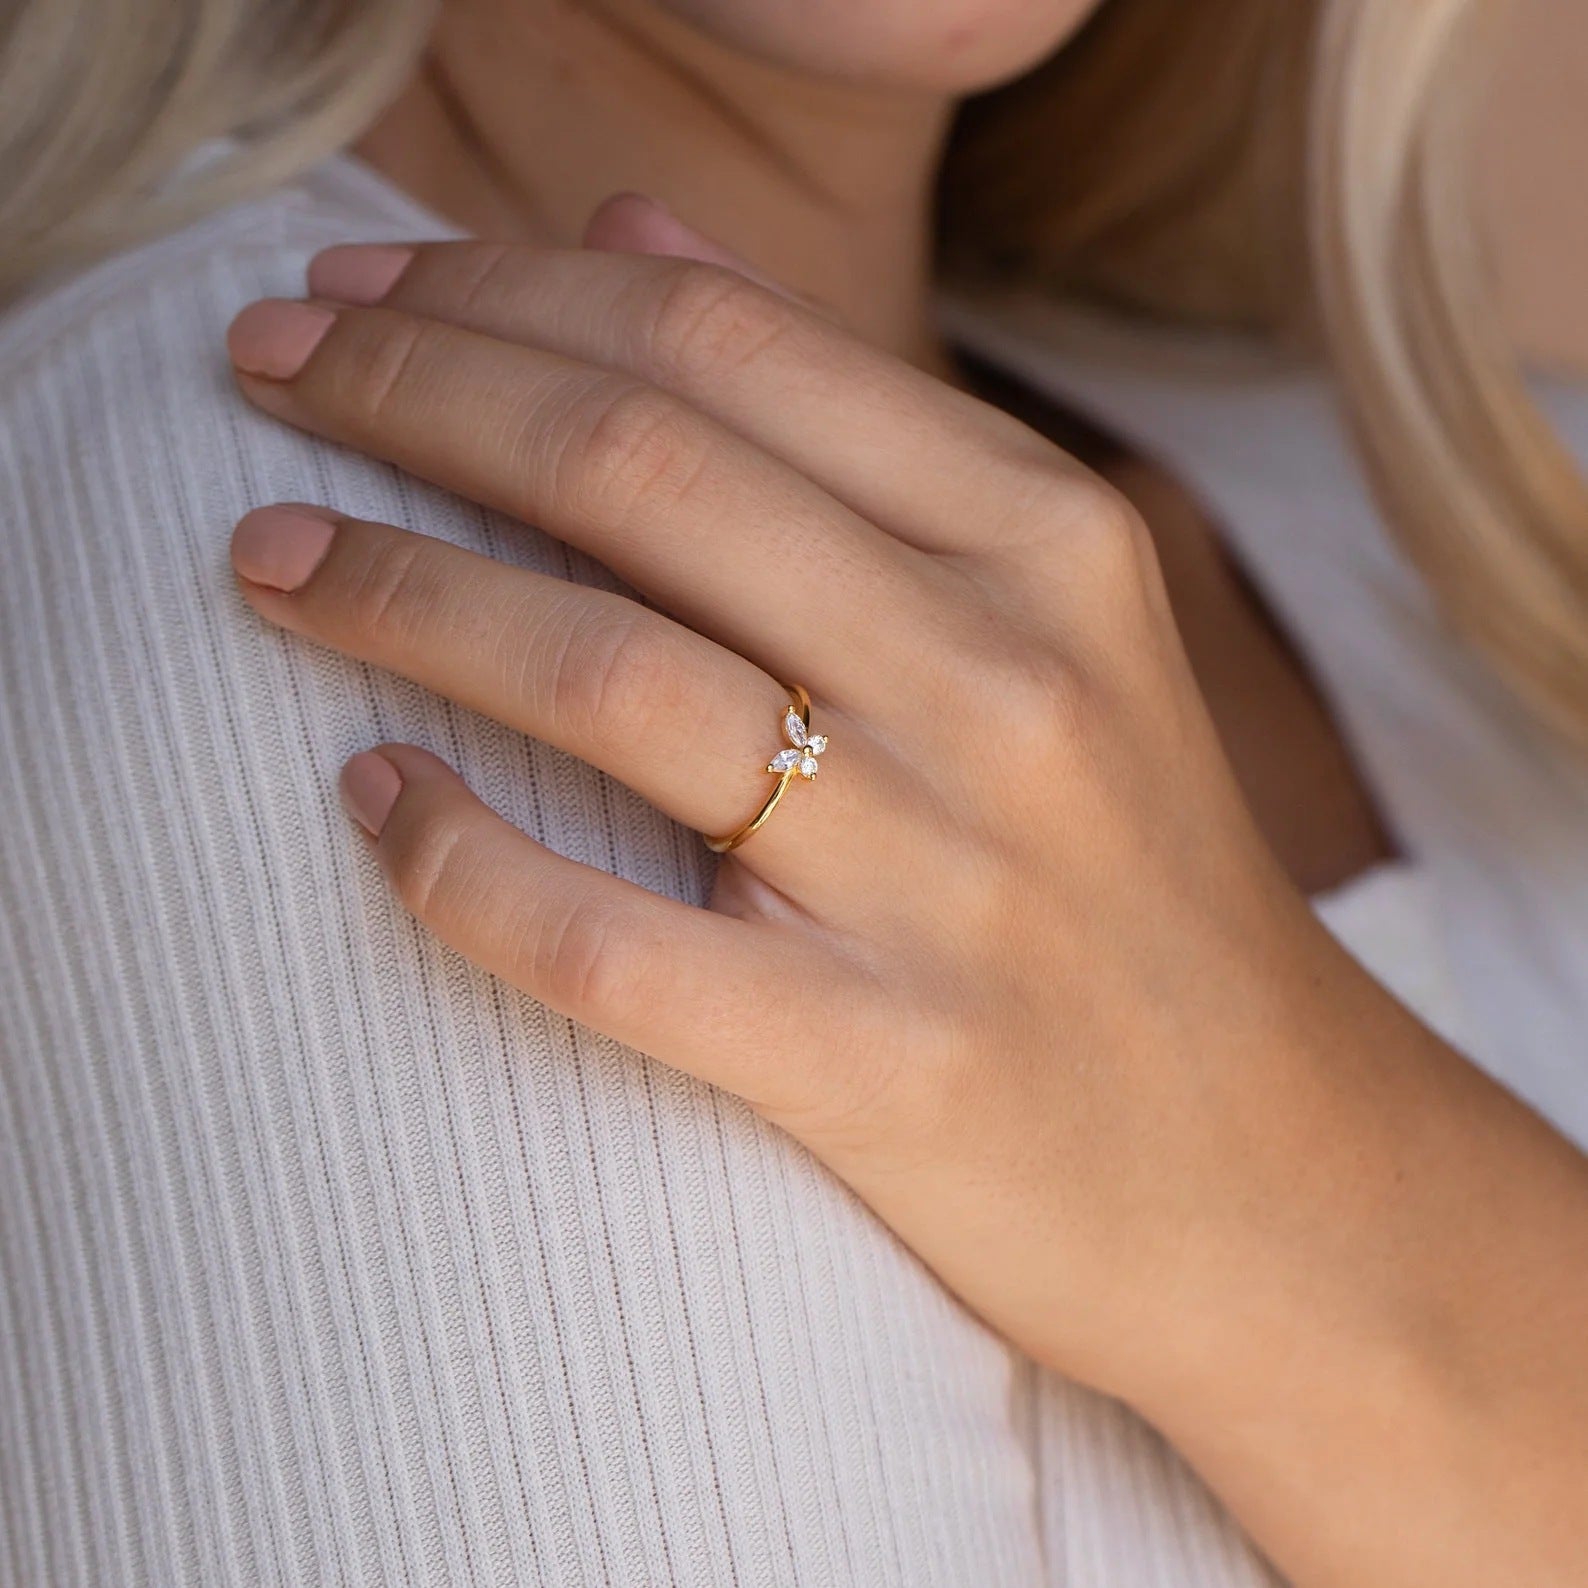 A woman wearing a Sweet Full Diamond Butterfly Ring Minimalist Style by Maramalive™.